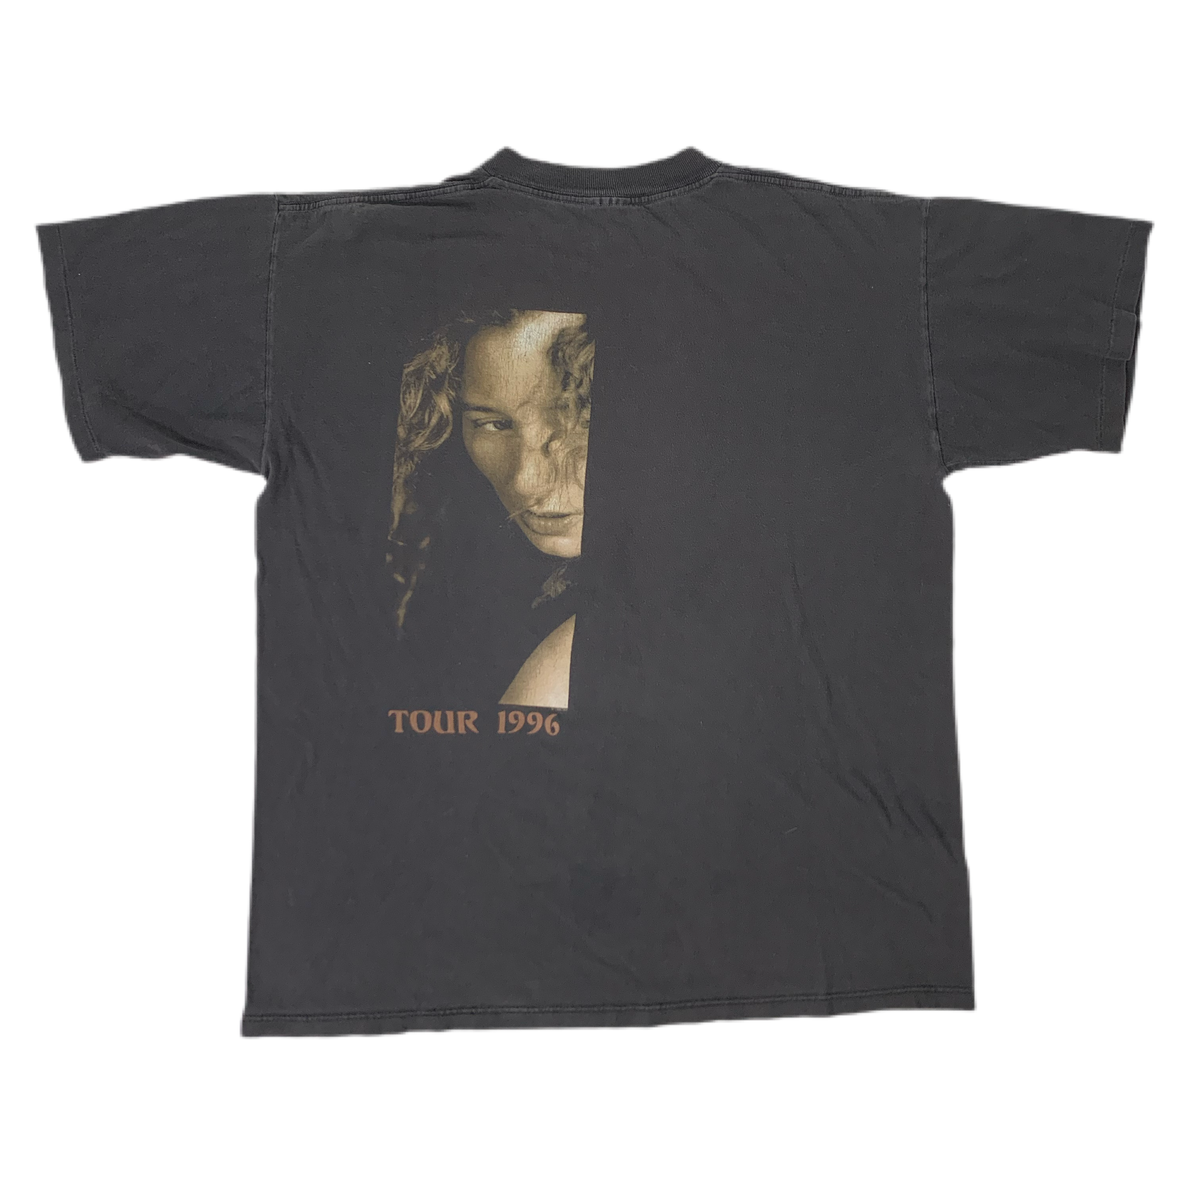 Vintage Tori Amos “Tour 1996” T-Shirt